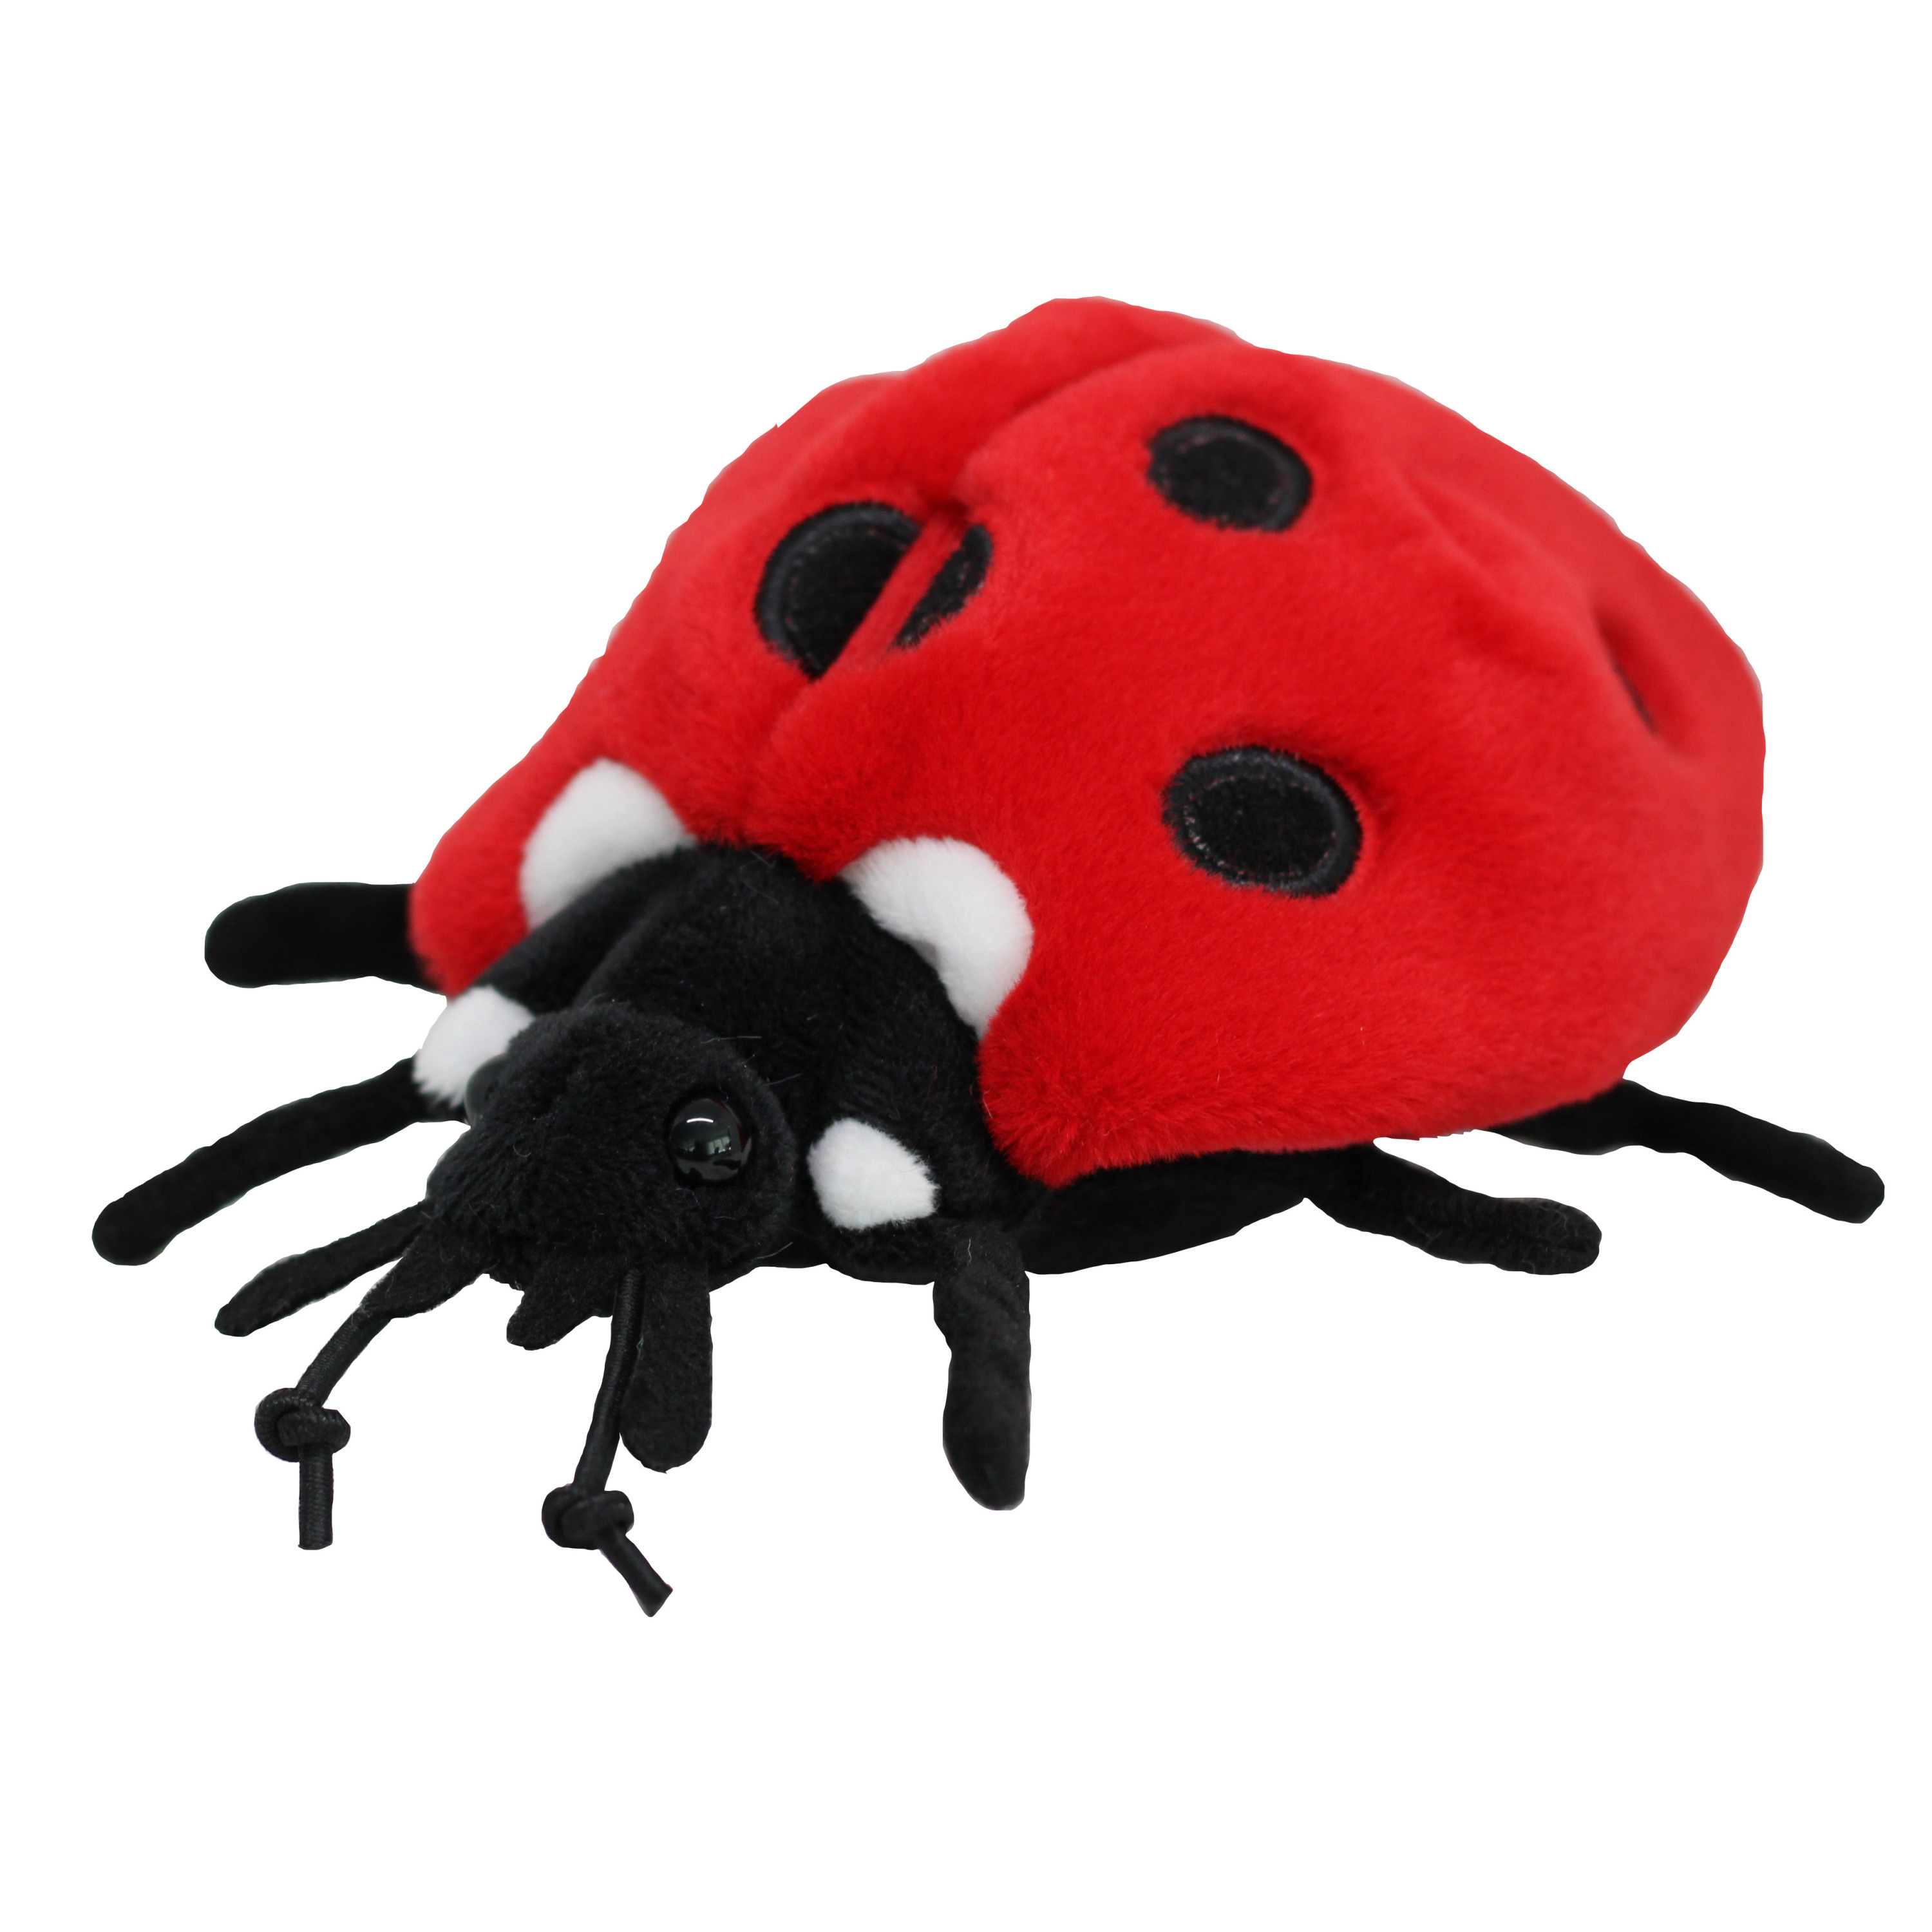 Nature Planet Knuffeldier Lieveheersbeestje - zachte pluche stof - premium kwaliteit knuffels - rood/zwart - 15 cm -